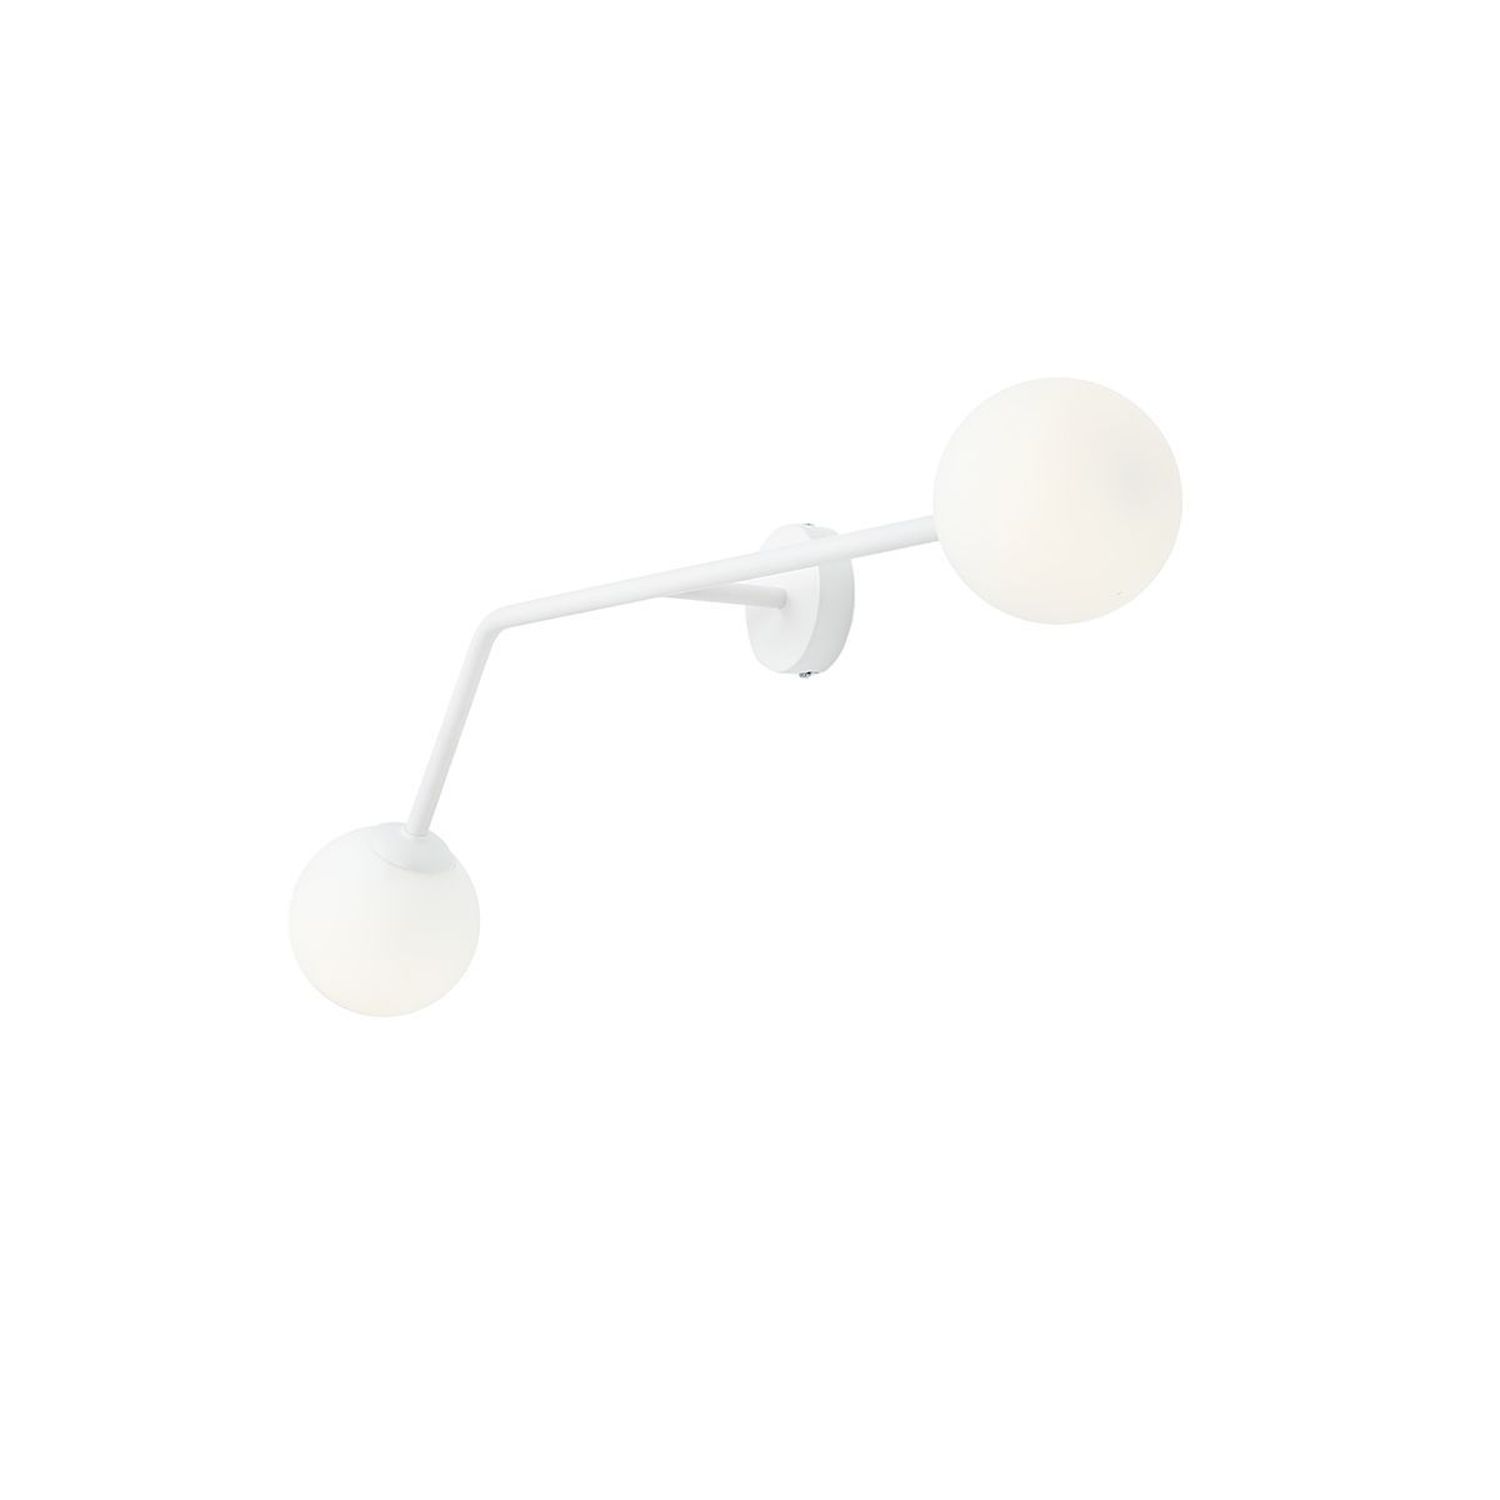 Blendarme Wandlampe Glas Weiß H:34 cm E14 gemütlich